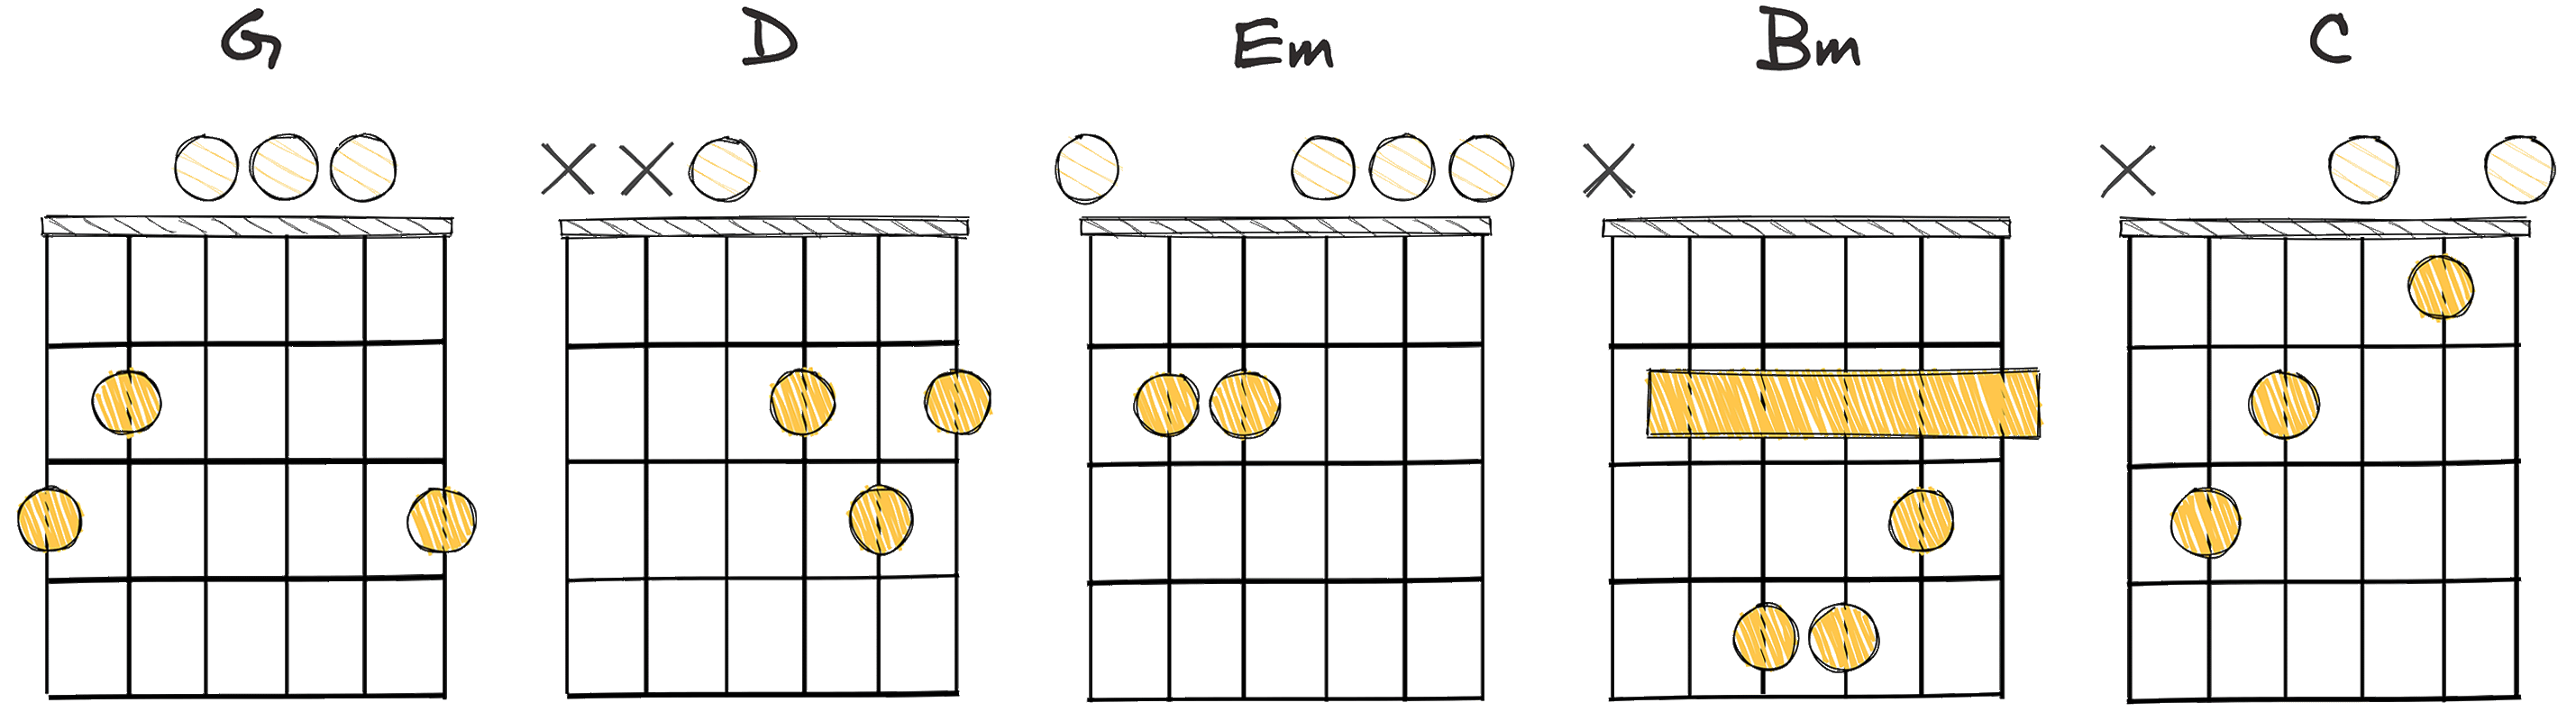 I-V-vi-iii-IV (1-5-6-3-4) chords diagram